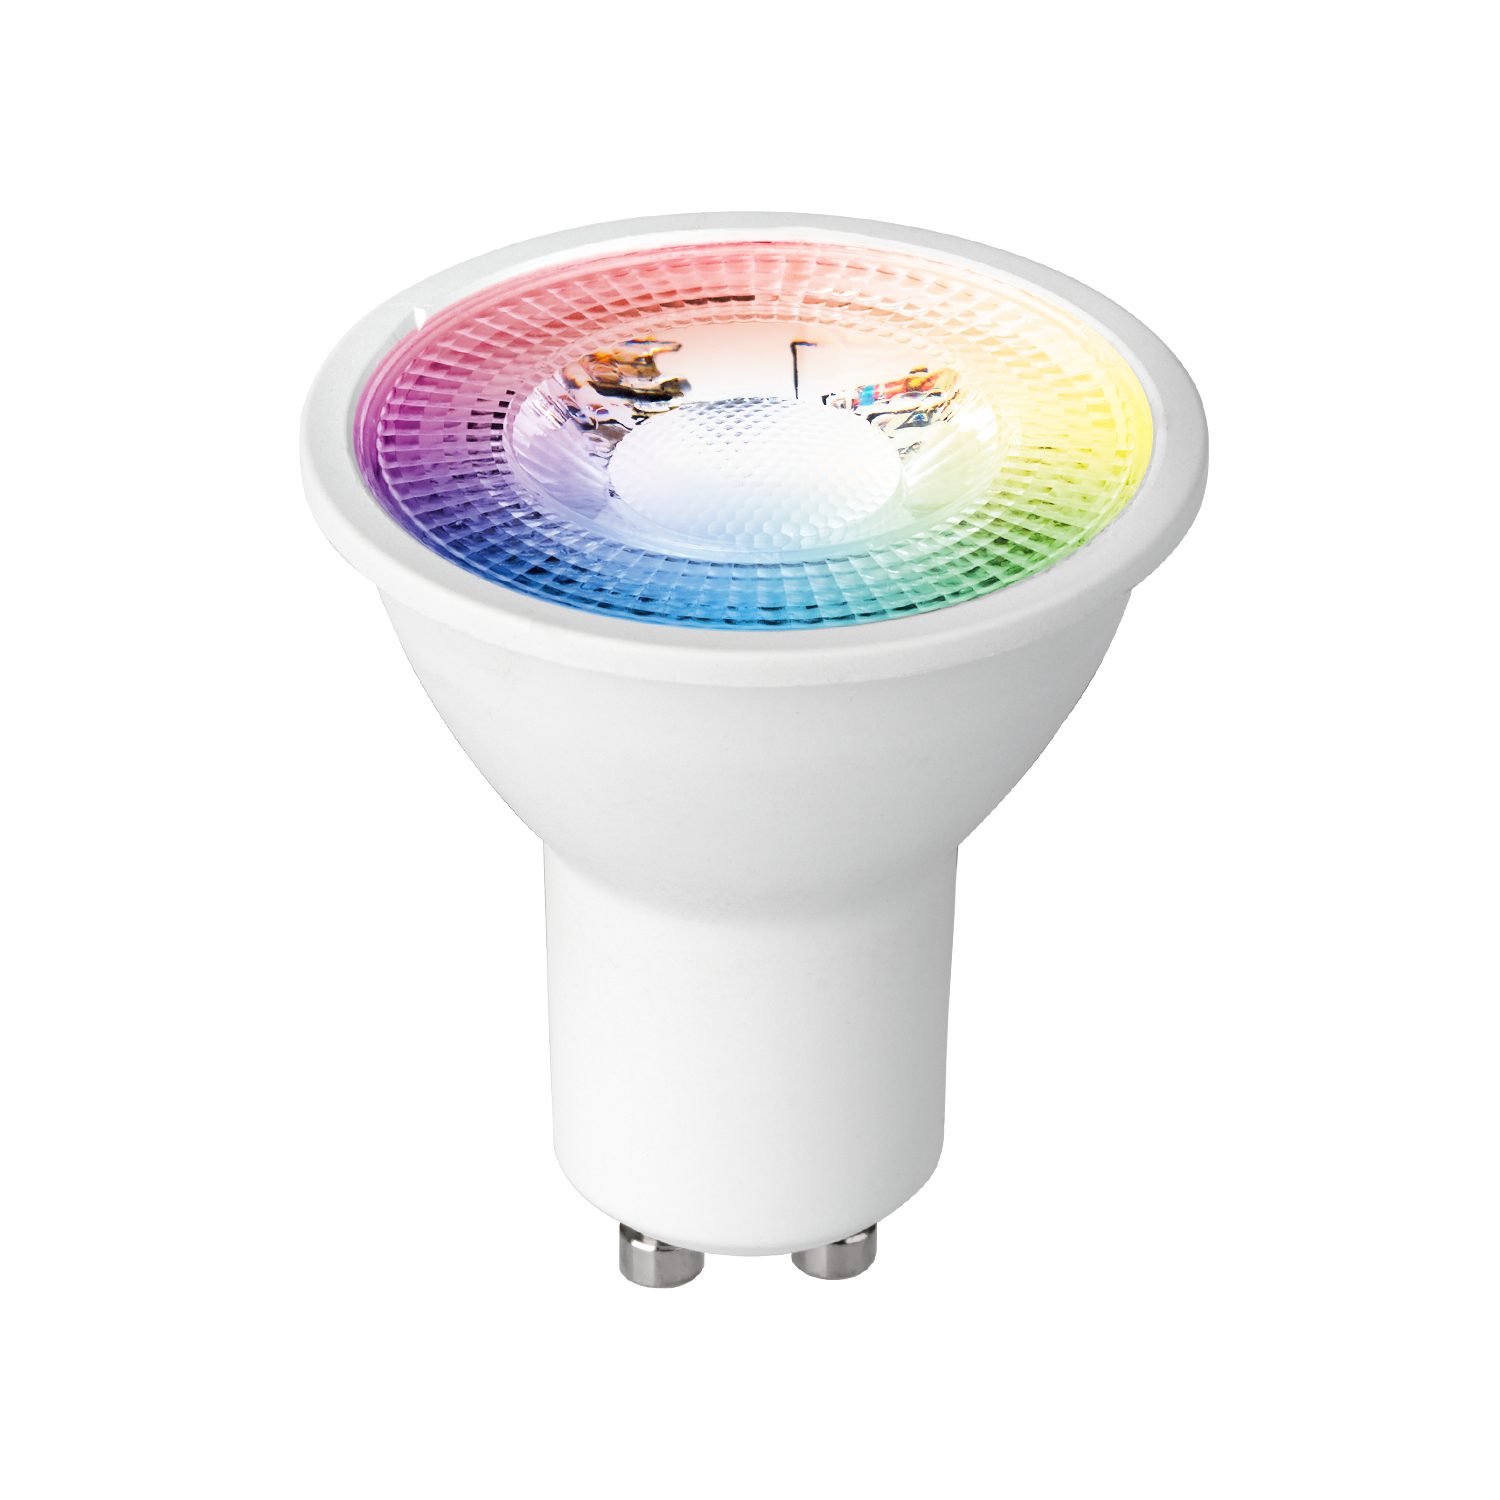 LEDANDO LED Einbaustrahler 3er RGB von GU10 weiß Set in 1 Einbaustrahler - 3W LED mit LEDANDO LED